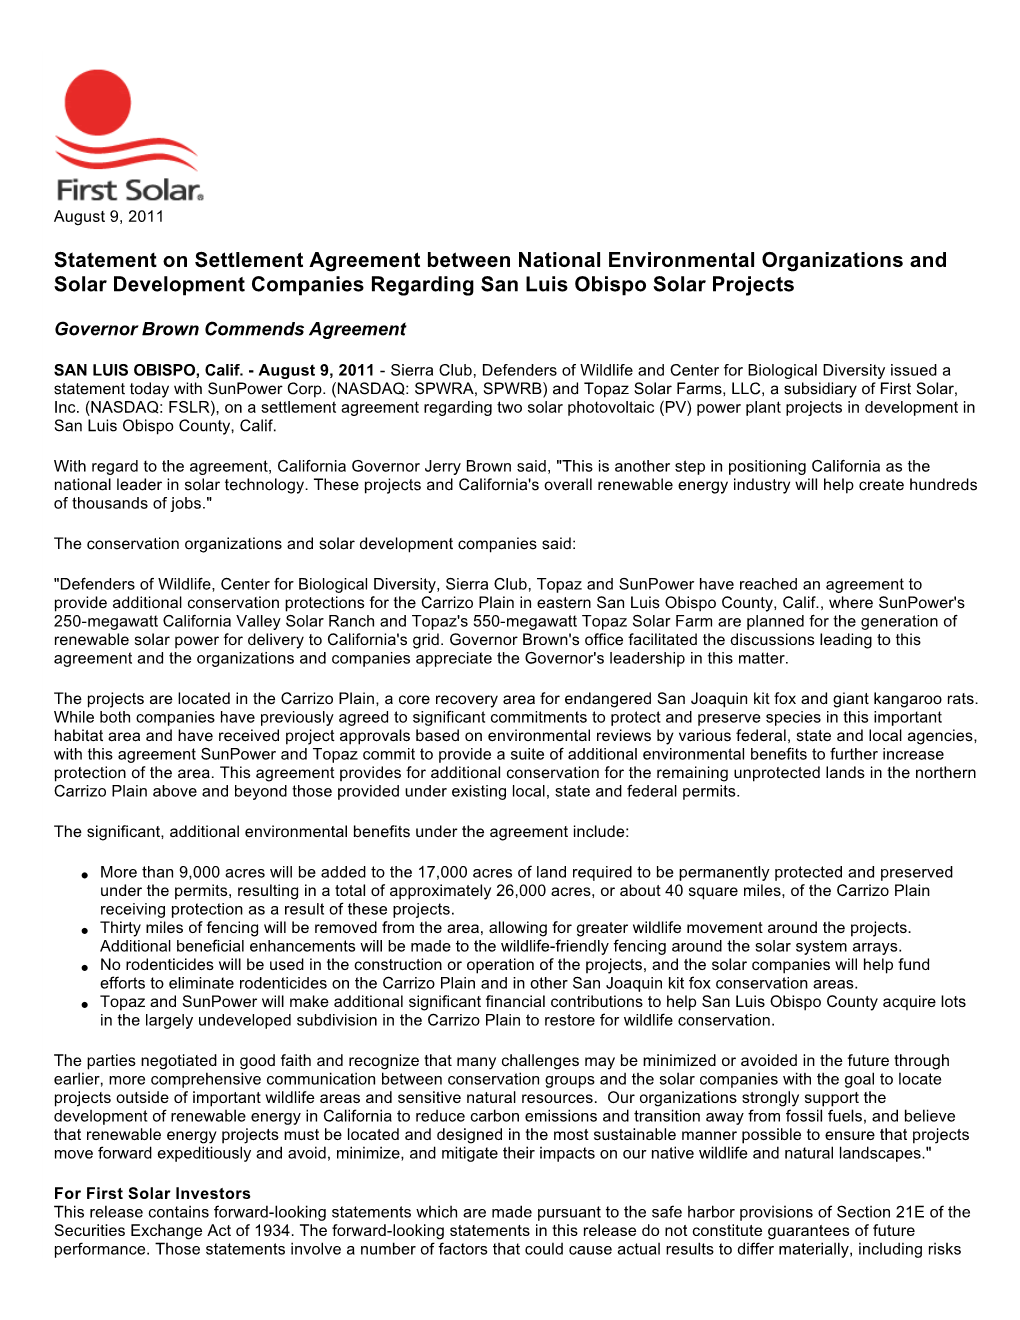 Statement on Settlement Agreement Between National Environmental Organizations and Solar Development Companies Regarding San Luis Obispo Solar Projects